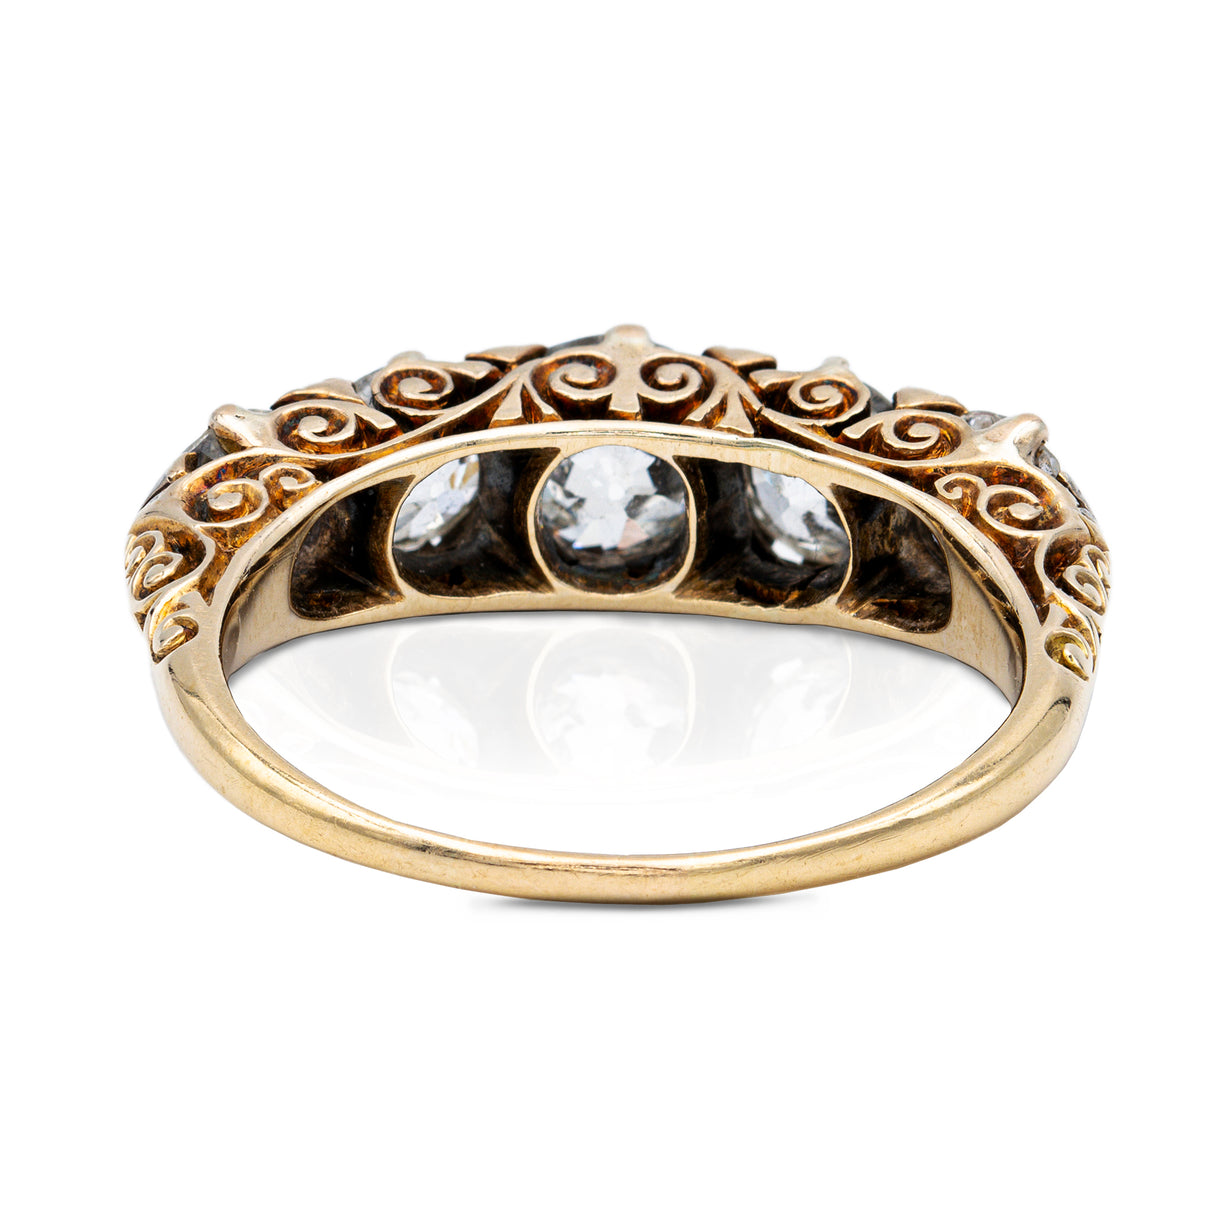 Victorian half-hoop diamond engagement ring, rear view.